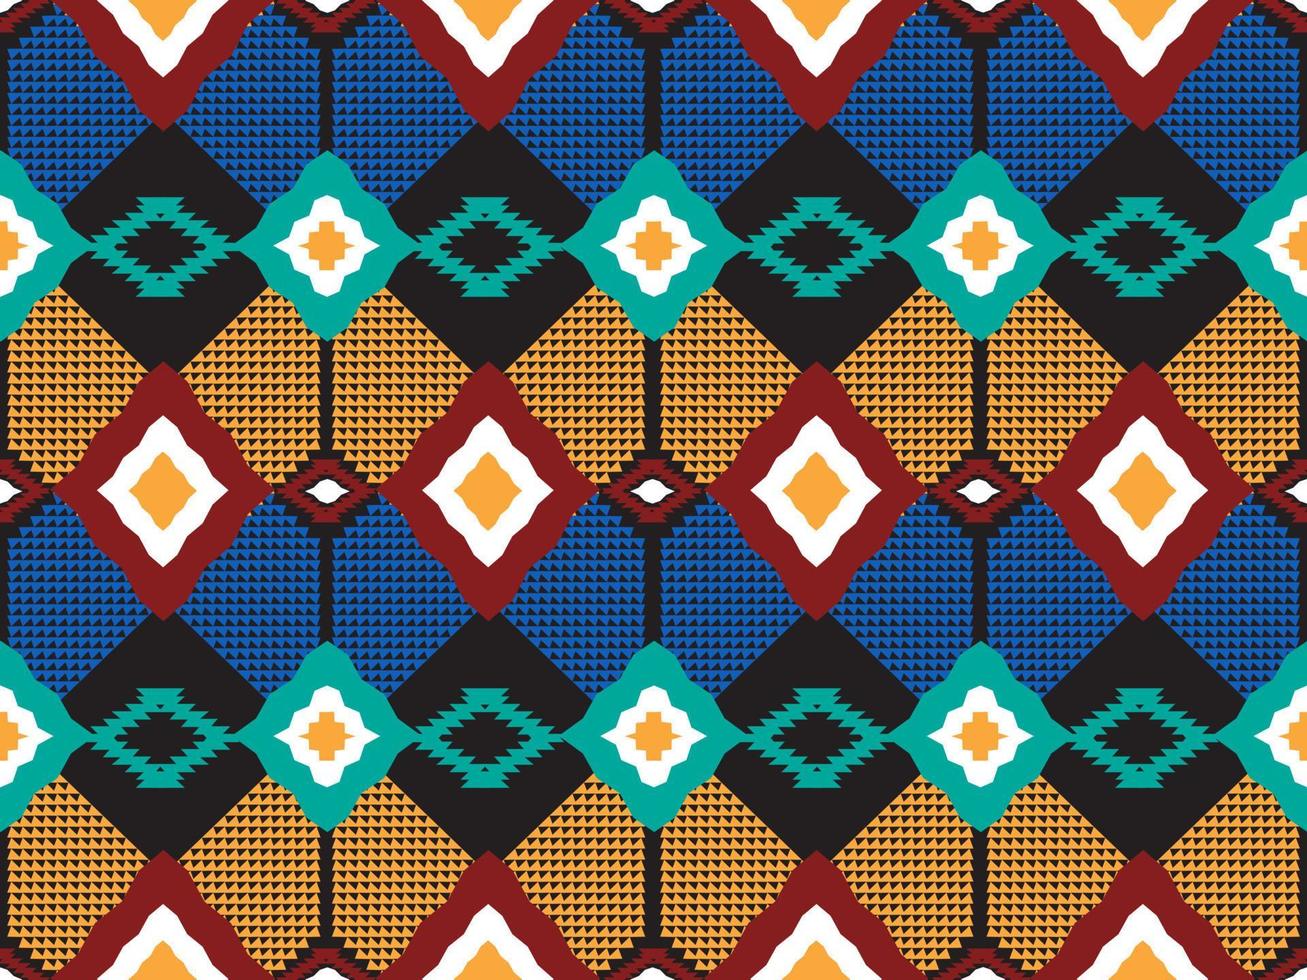 diseño tradicional oriental de fondo transparente para papel pintado, moqueta, ropa, envoltura, batik, tela, ilustración vectorial patrón, bordado. vector